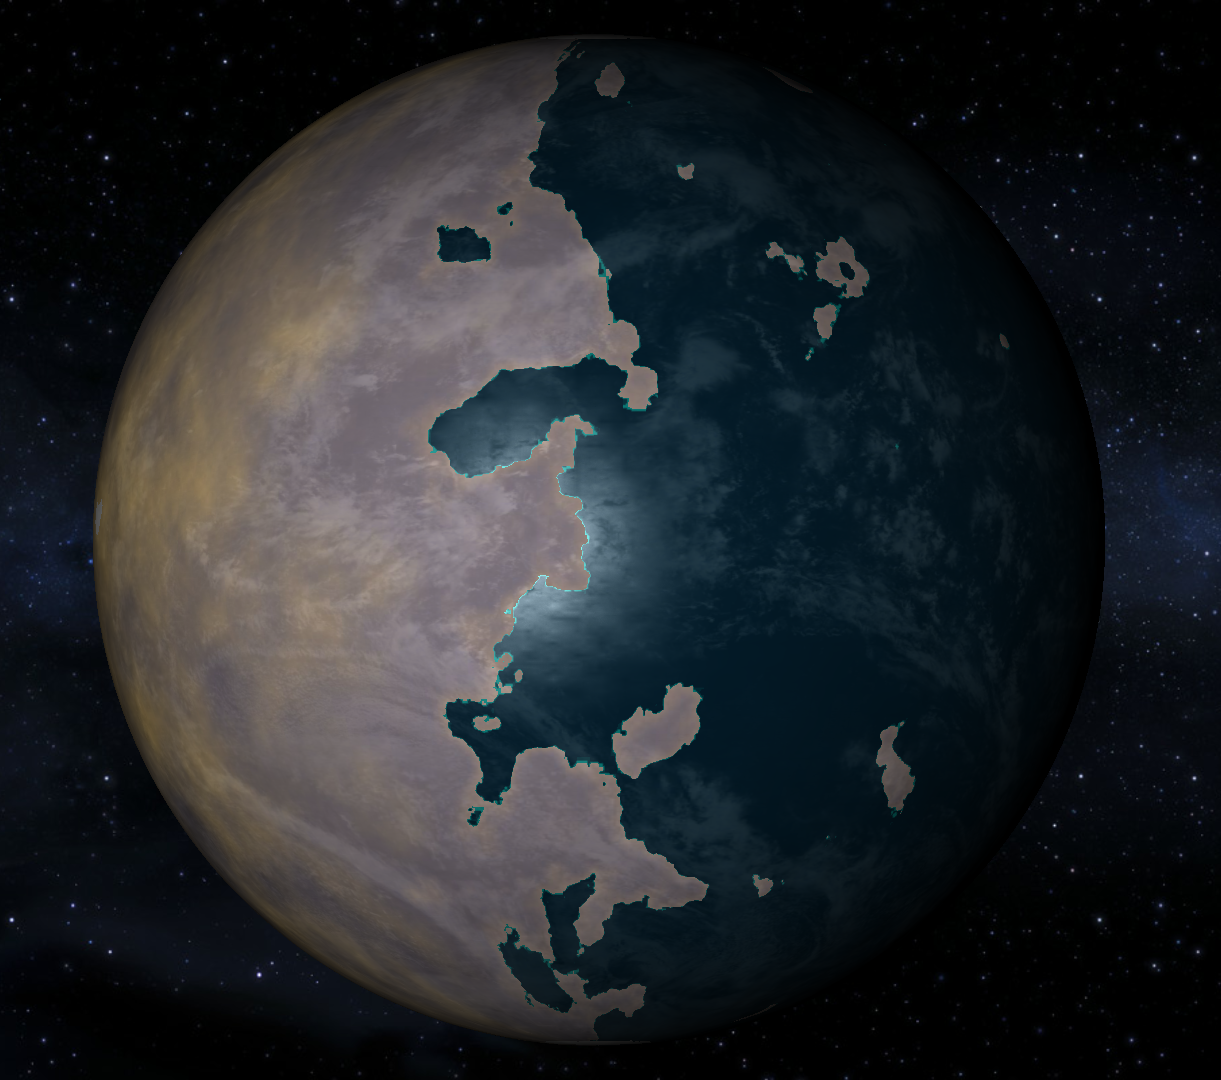 Eyeball planet - Wikipedia